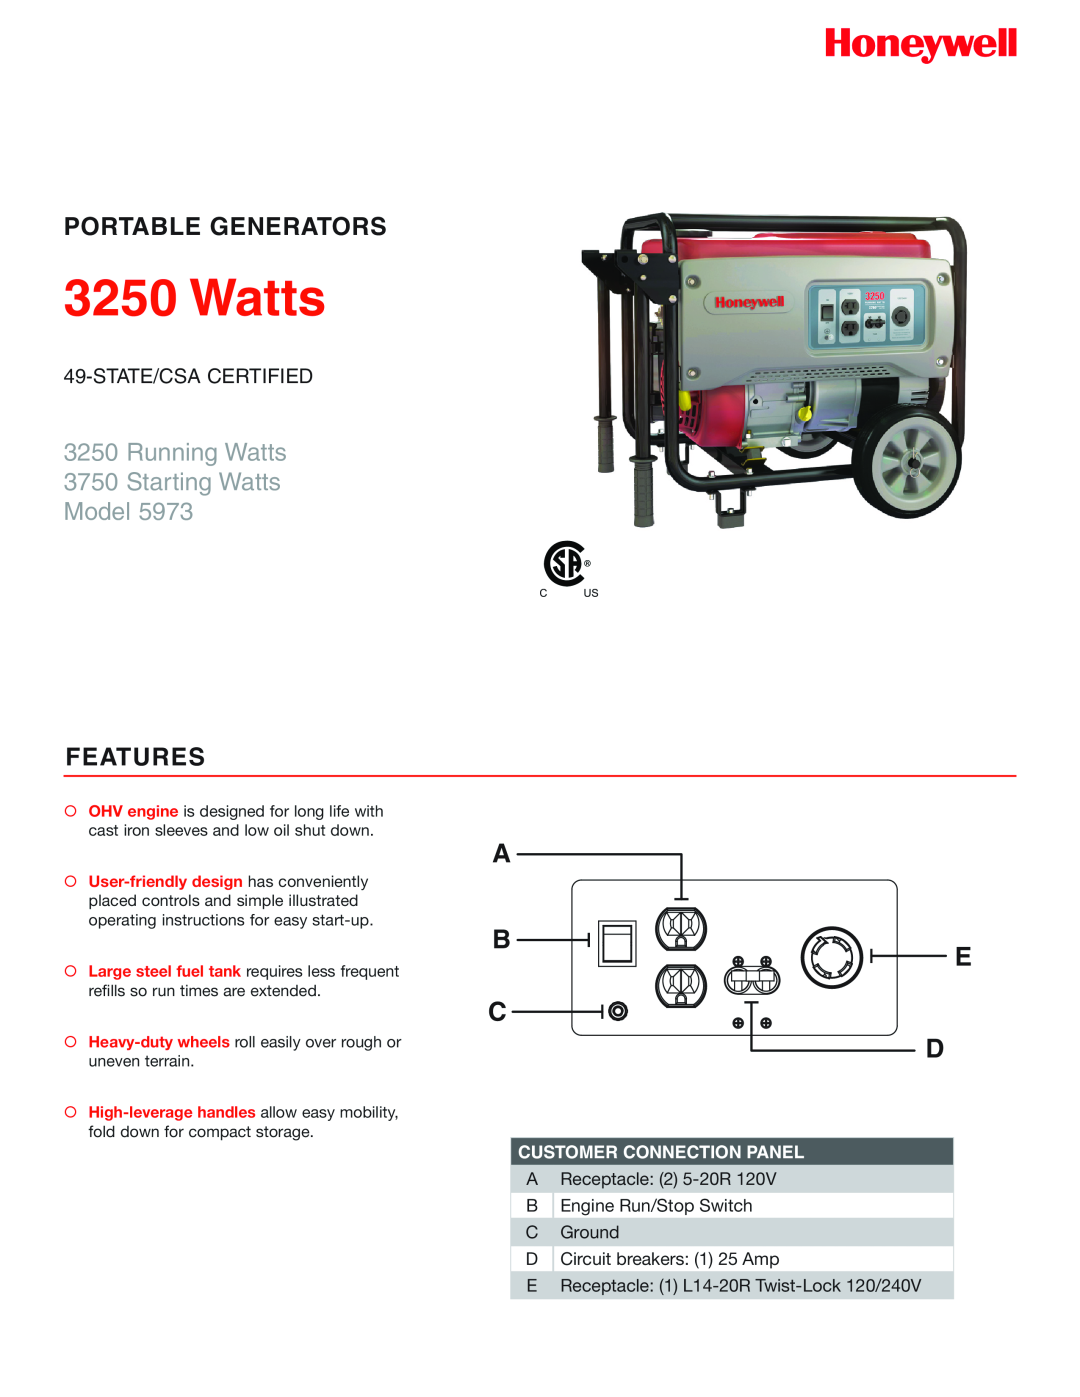 Honeywell 5973 manual State/Csacertified, Portable Generators, Running Watts 3750 Starting Watts Model, Features 